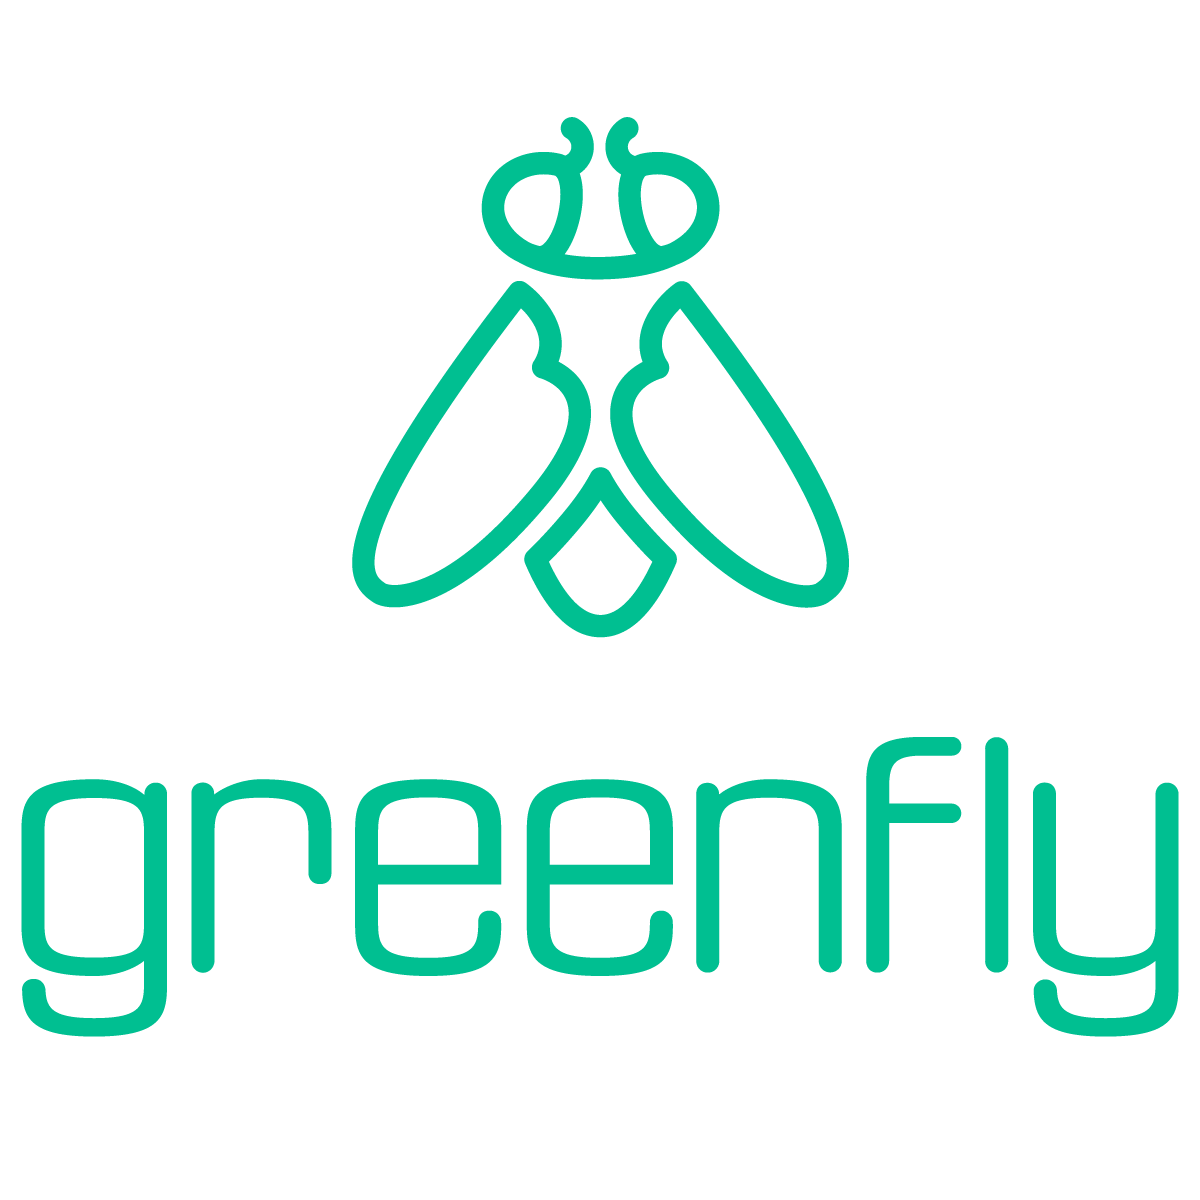 Greenfly, Inc.